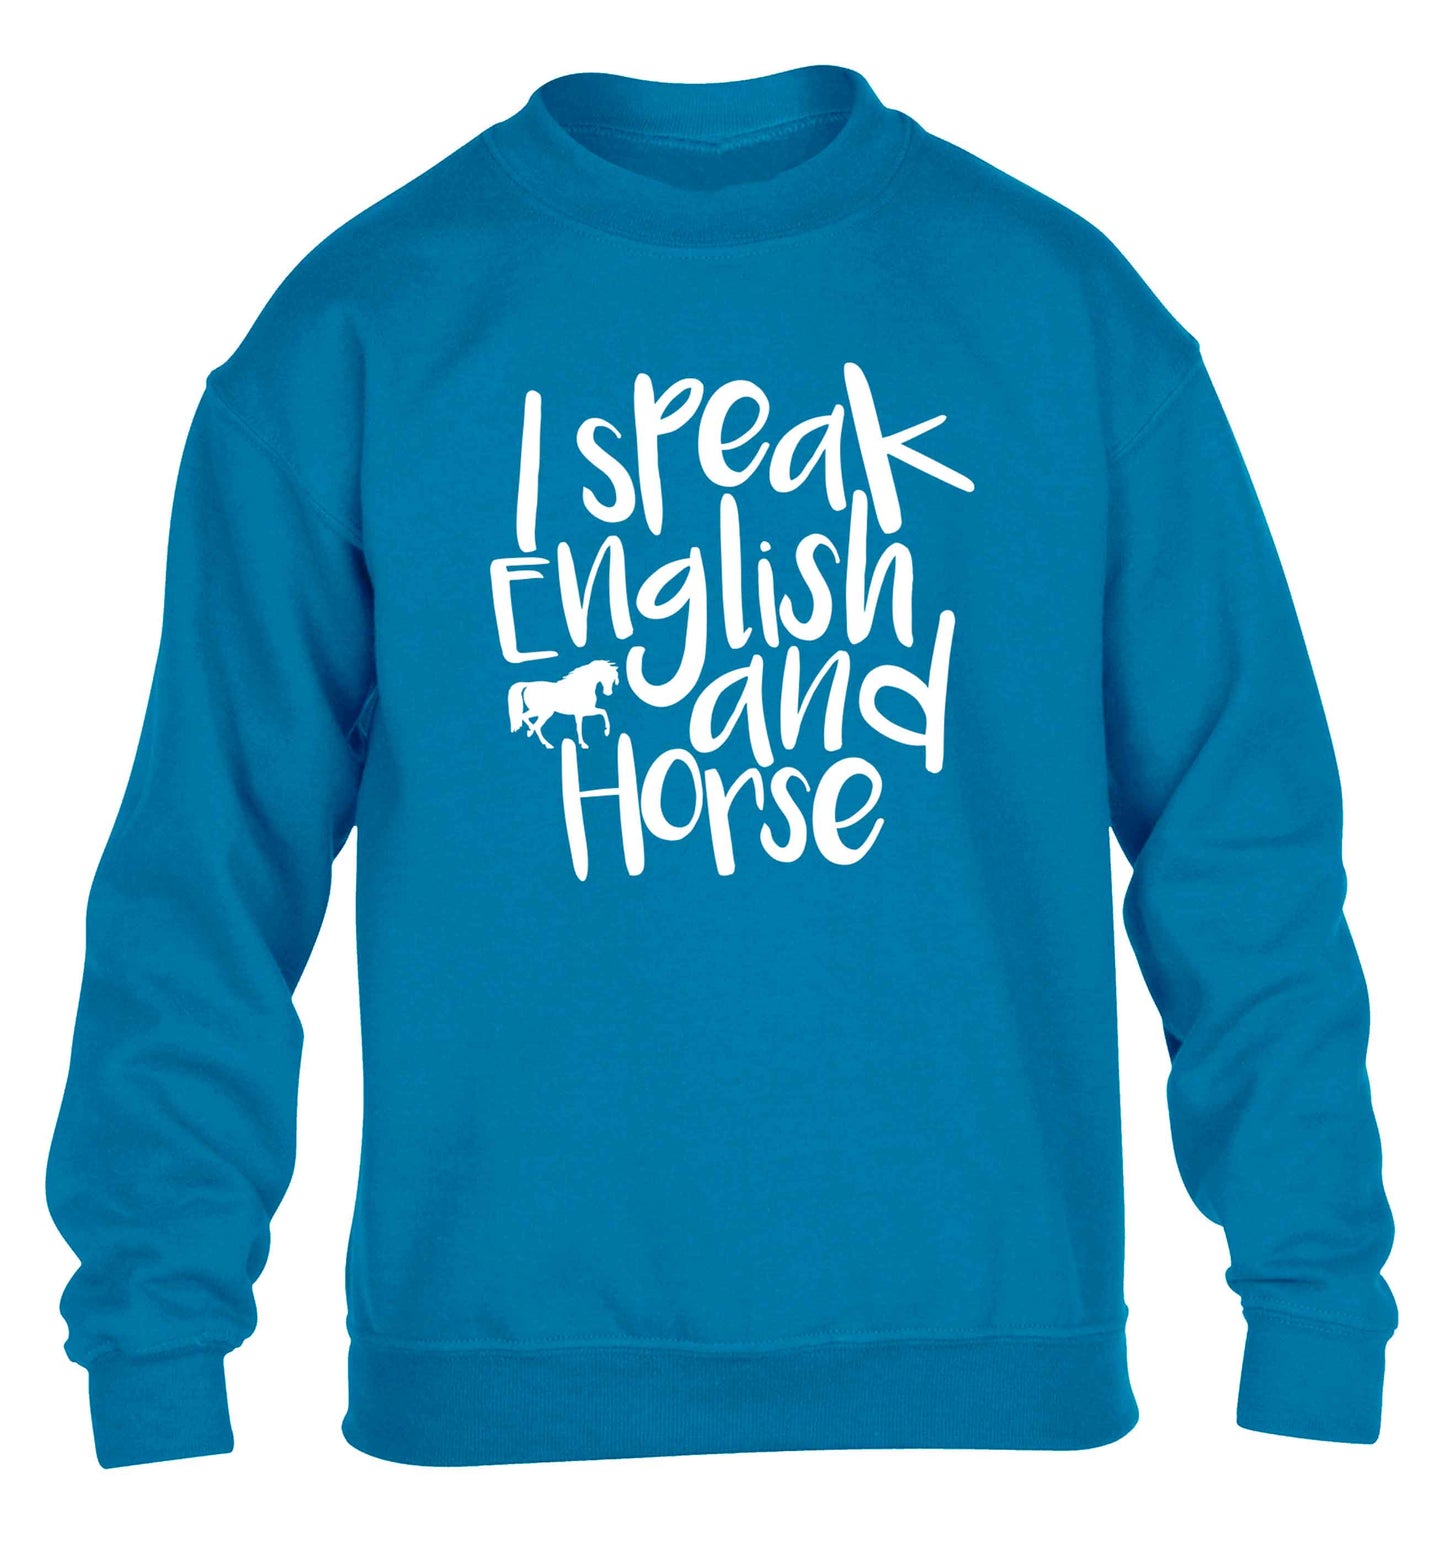 I speak English and horse children's blue sweater 12-13 Years